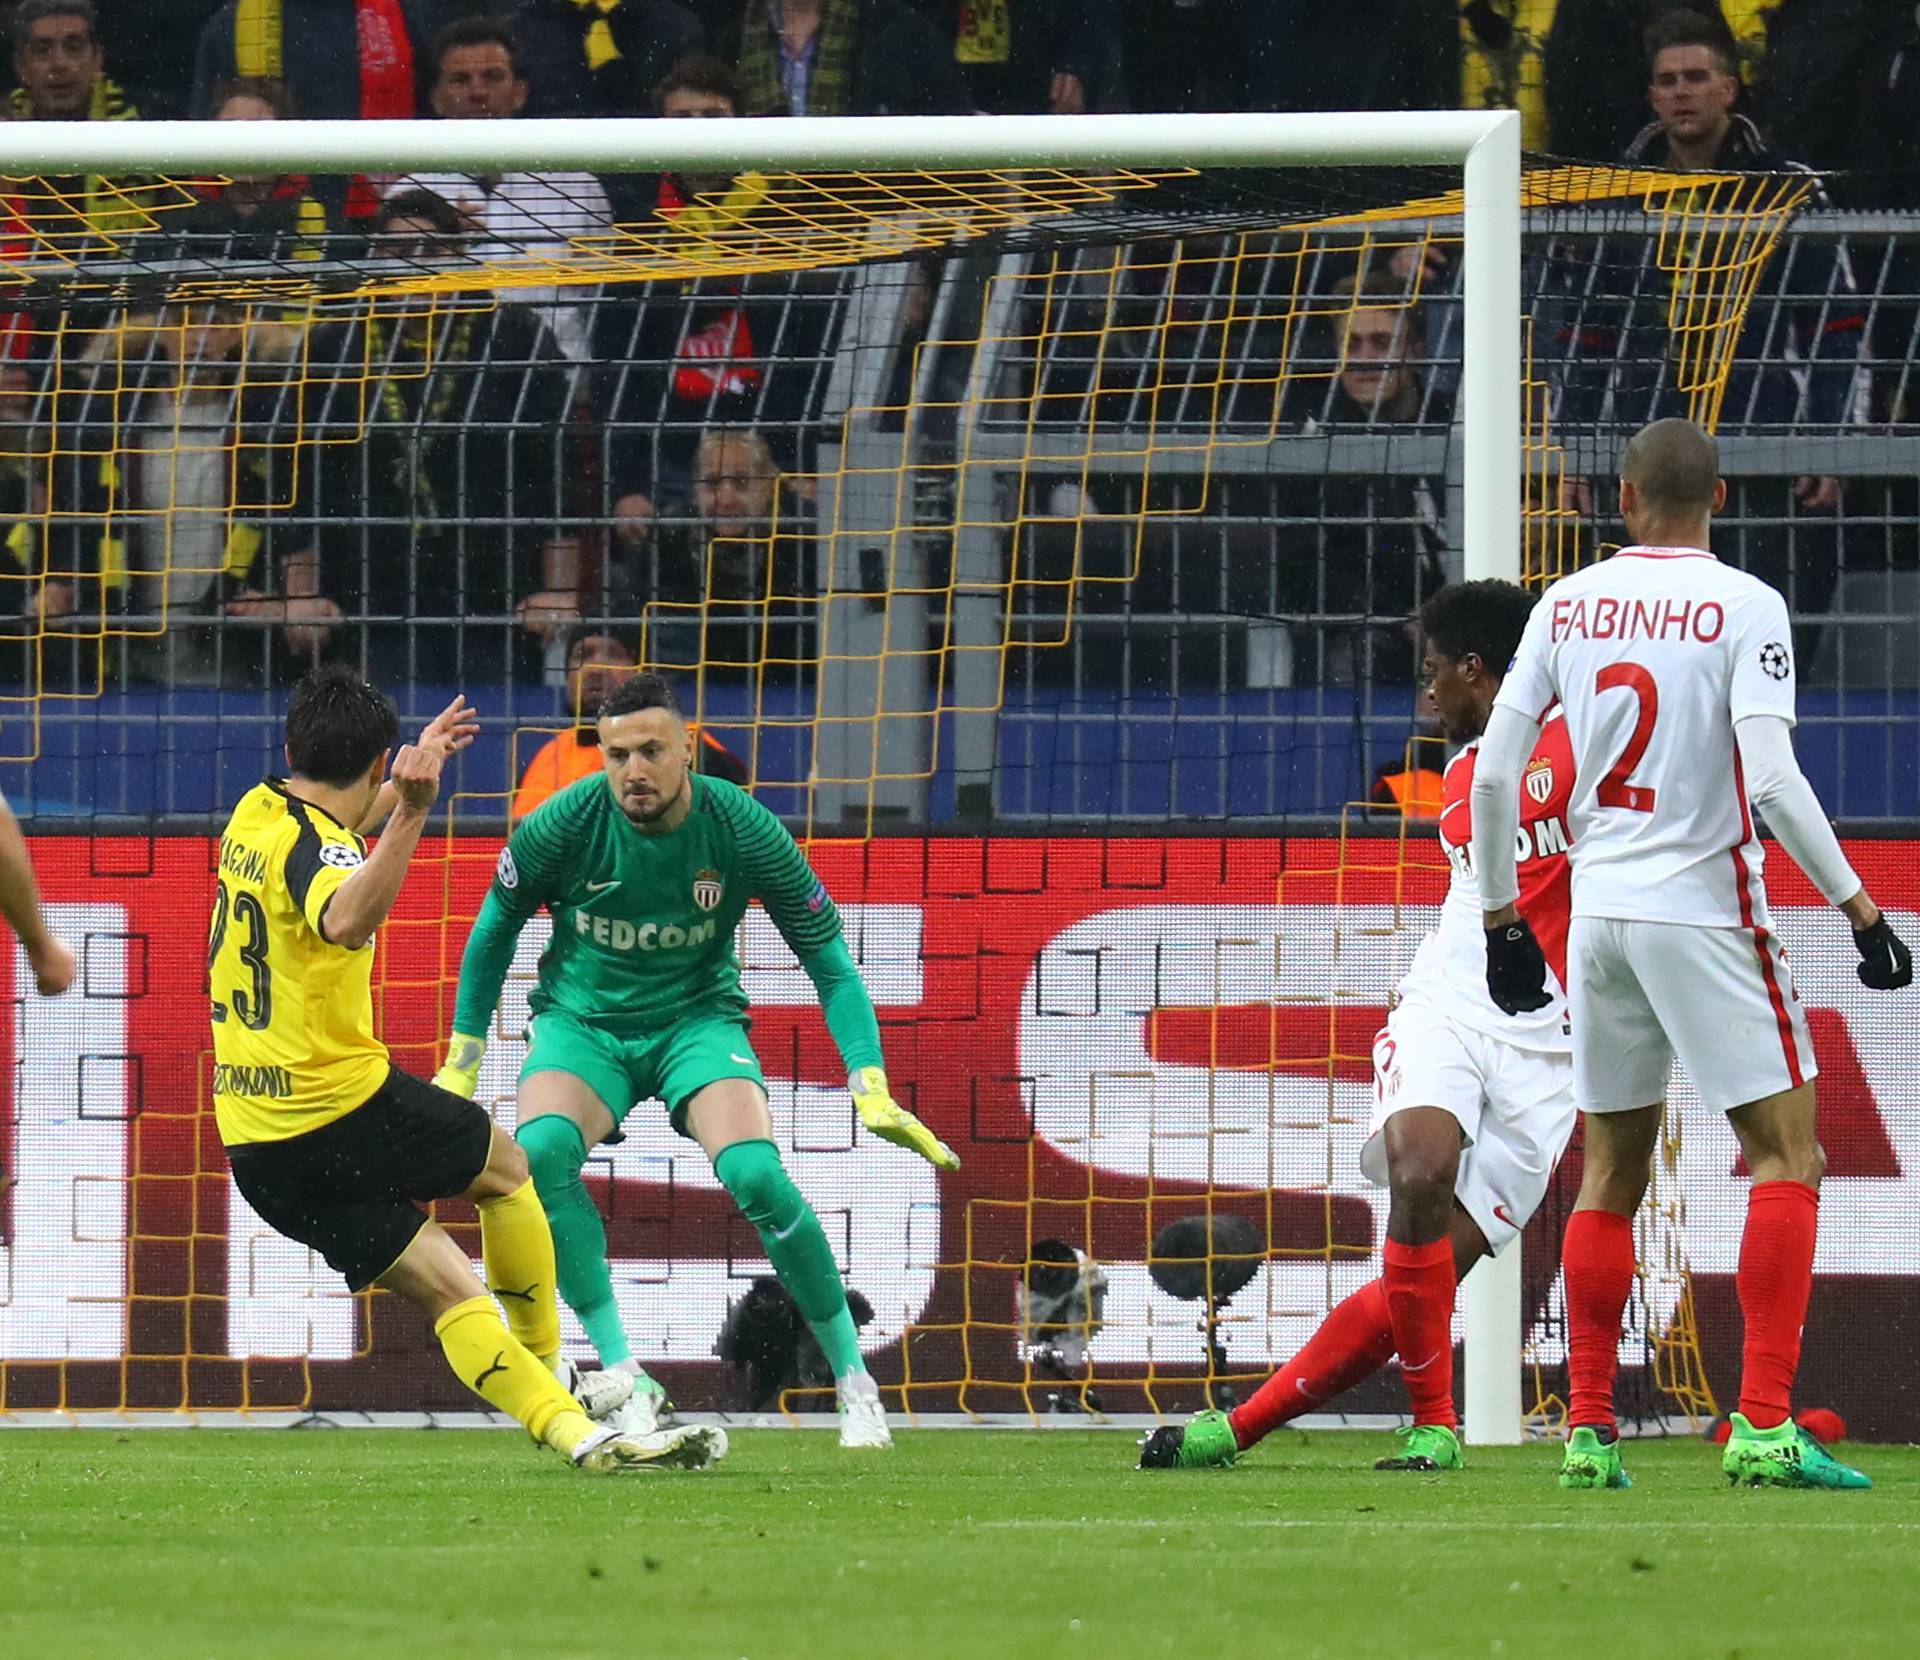 Borussia Dortmund's Shinji Kagawa misses a chance to score